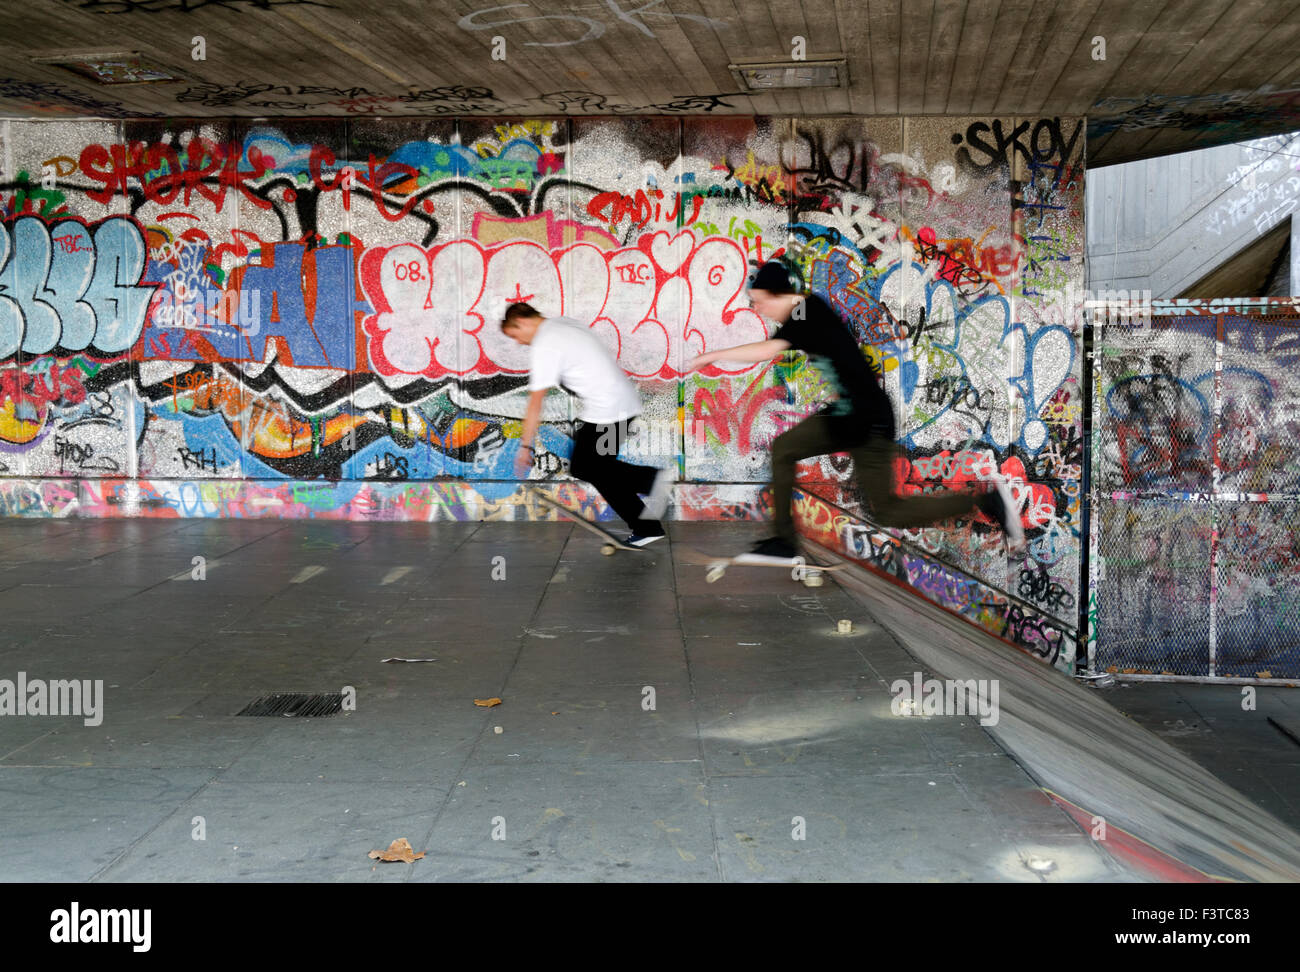 Skateboarders riding in a skate park Stock Photo